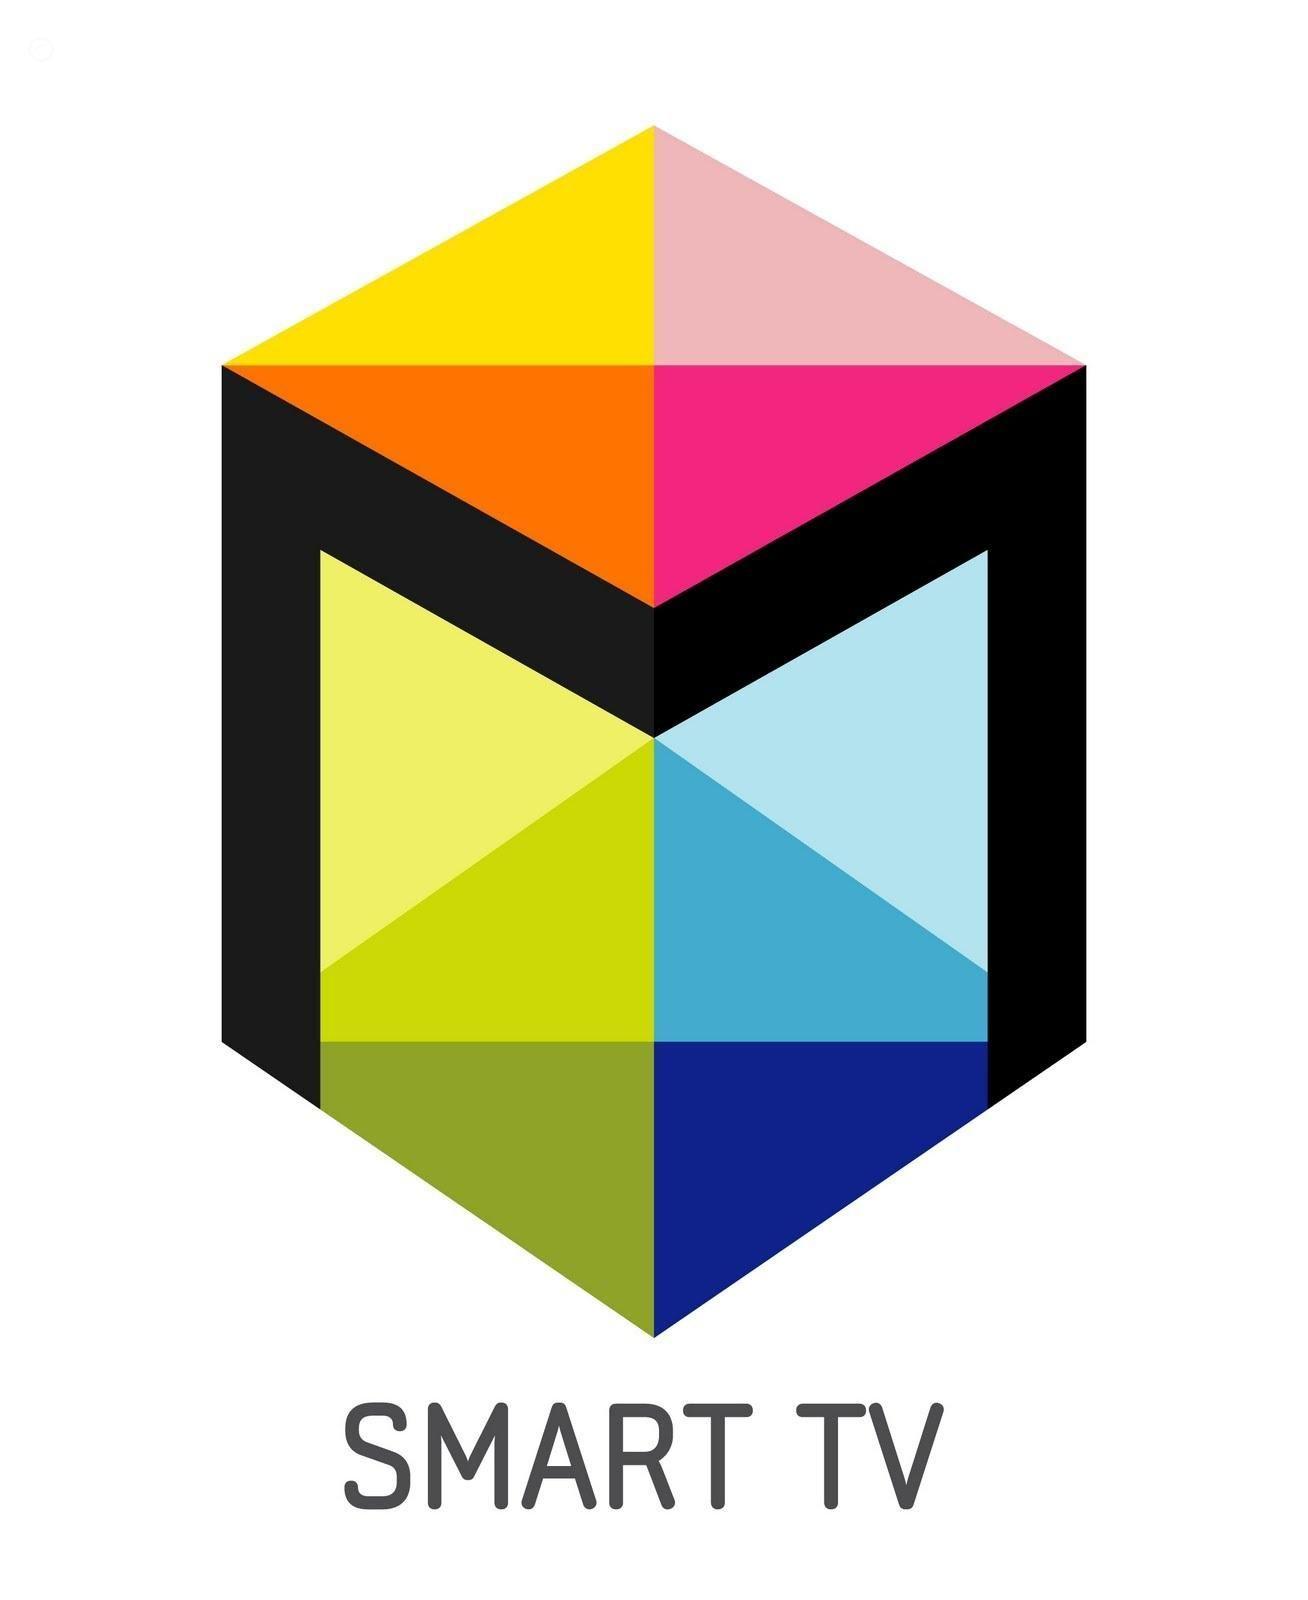 Samsung Smart TV Logo - Pin by Aidan Kenny on Logos | Smart TV, Samsung smart tv, Branding